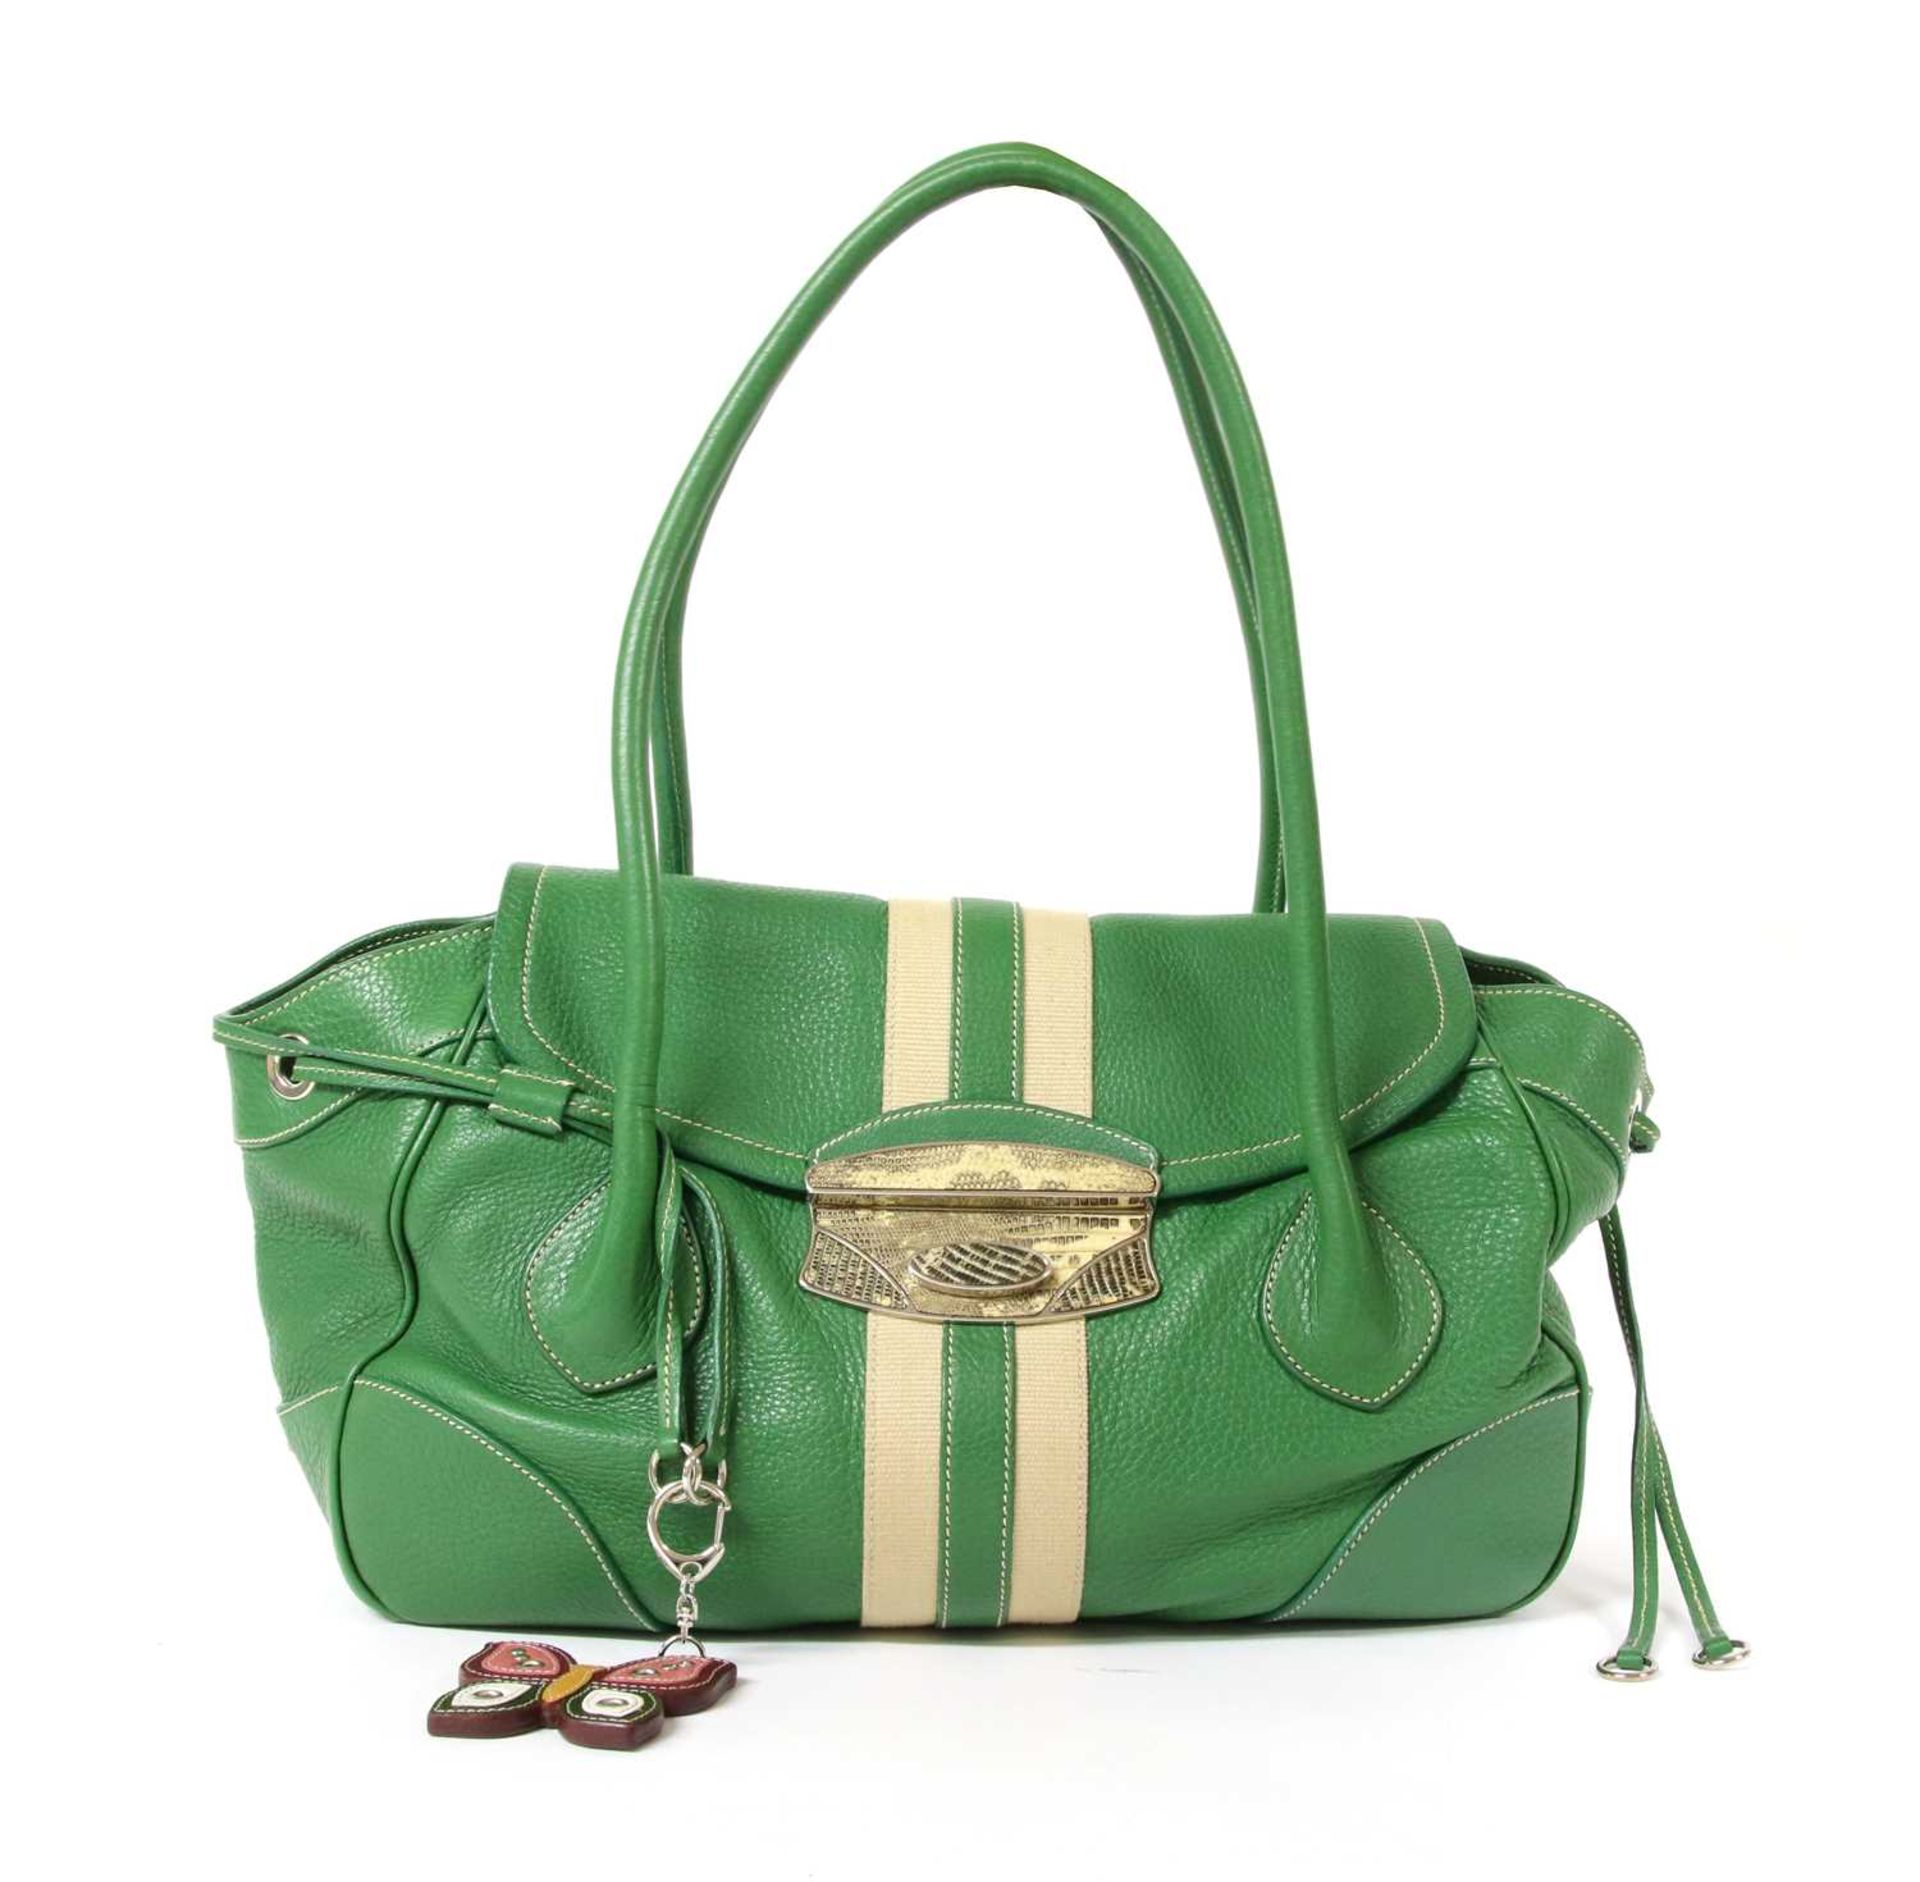 A Prada green leather shoulder bag,